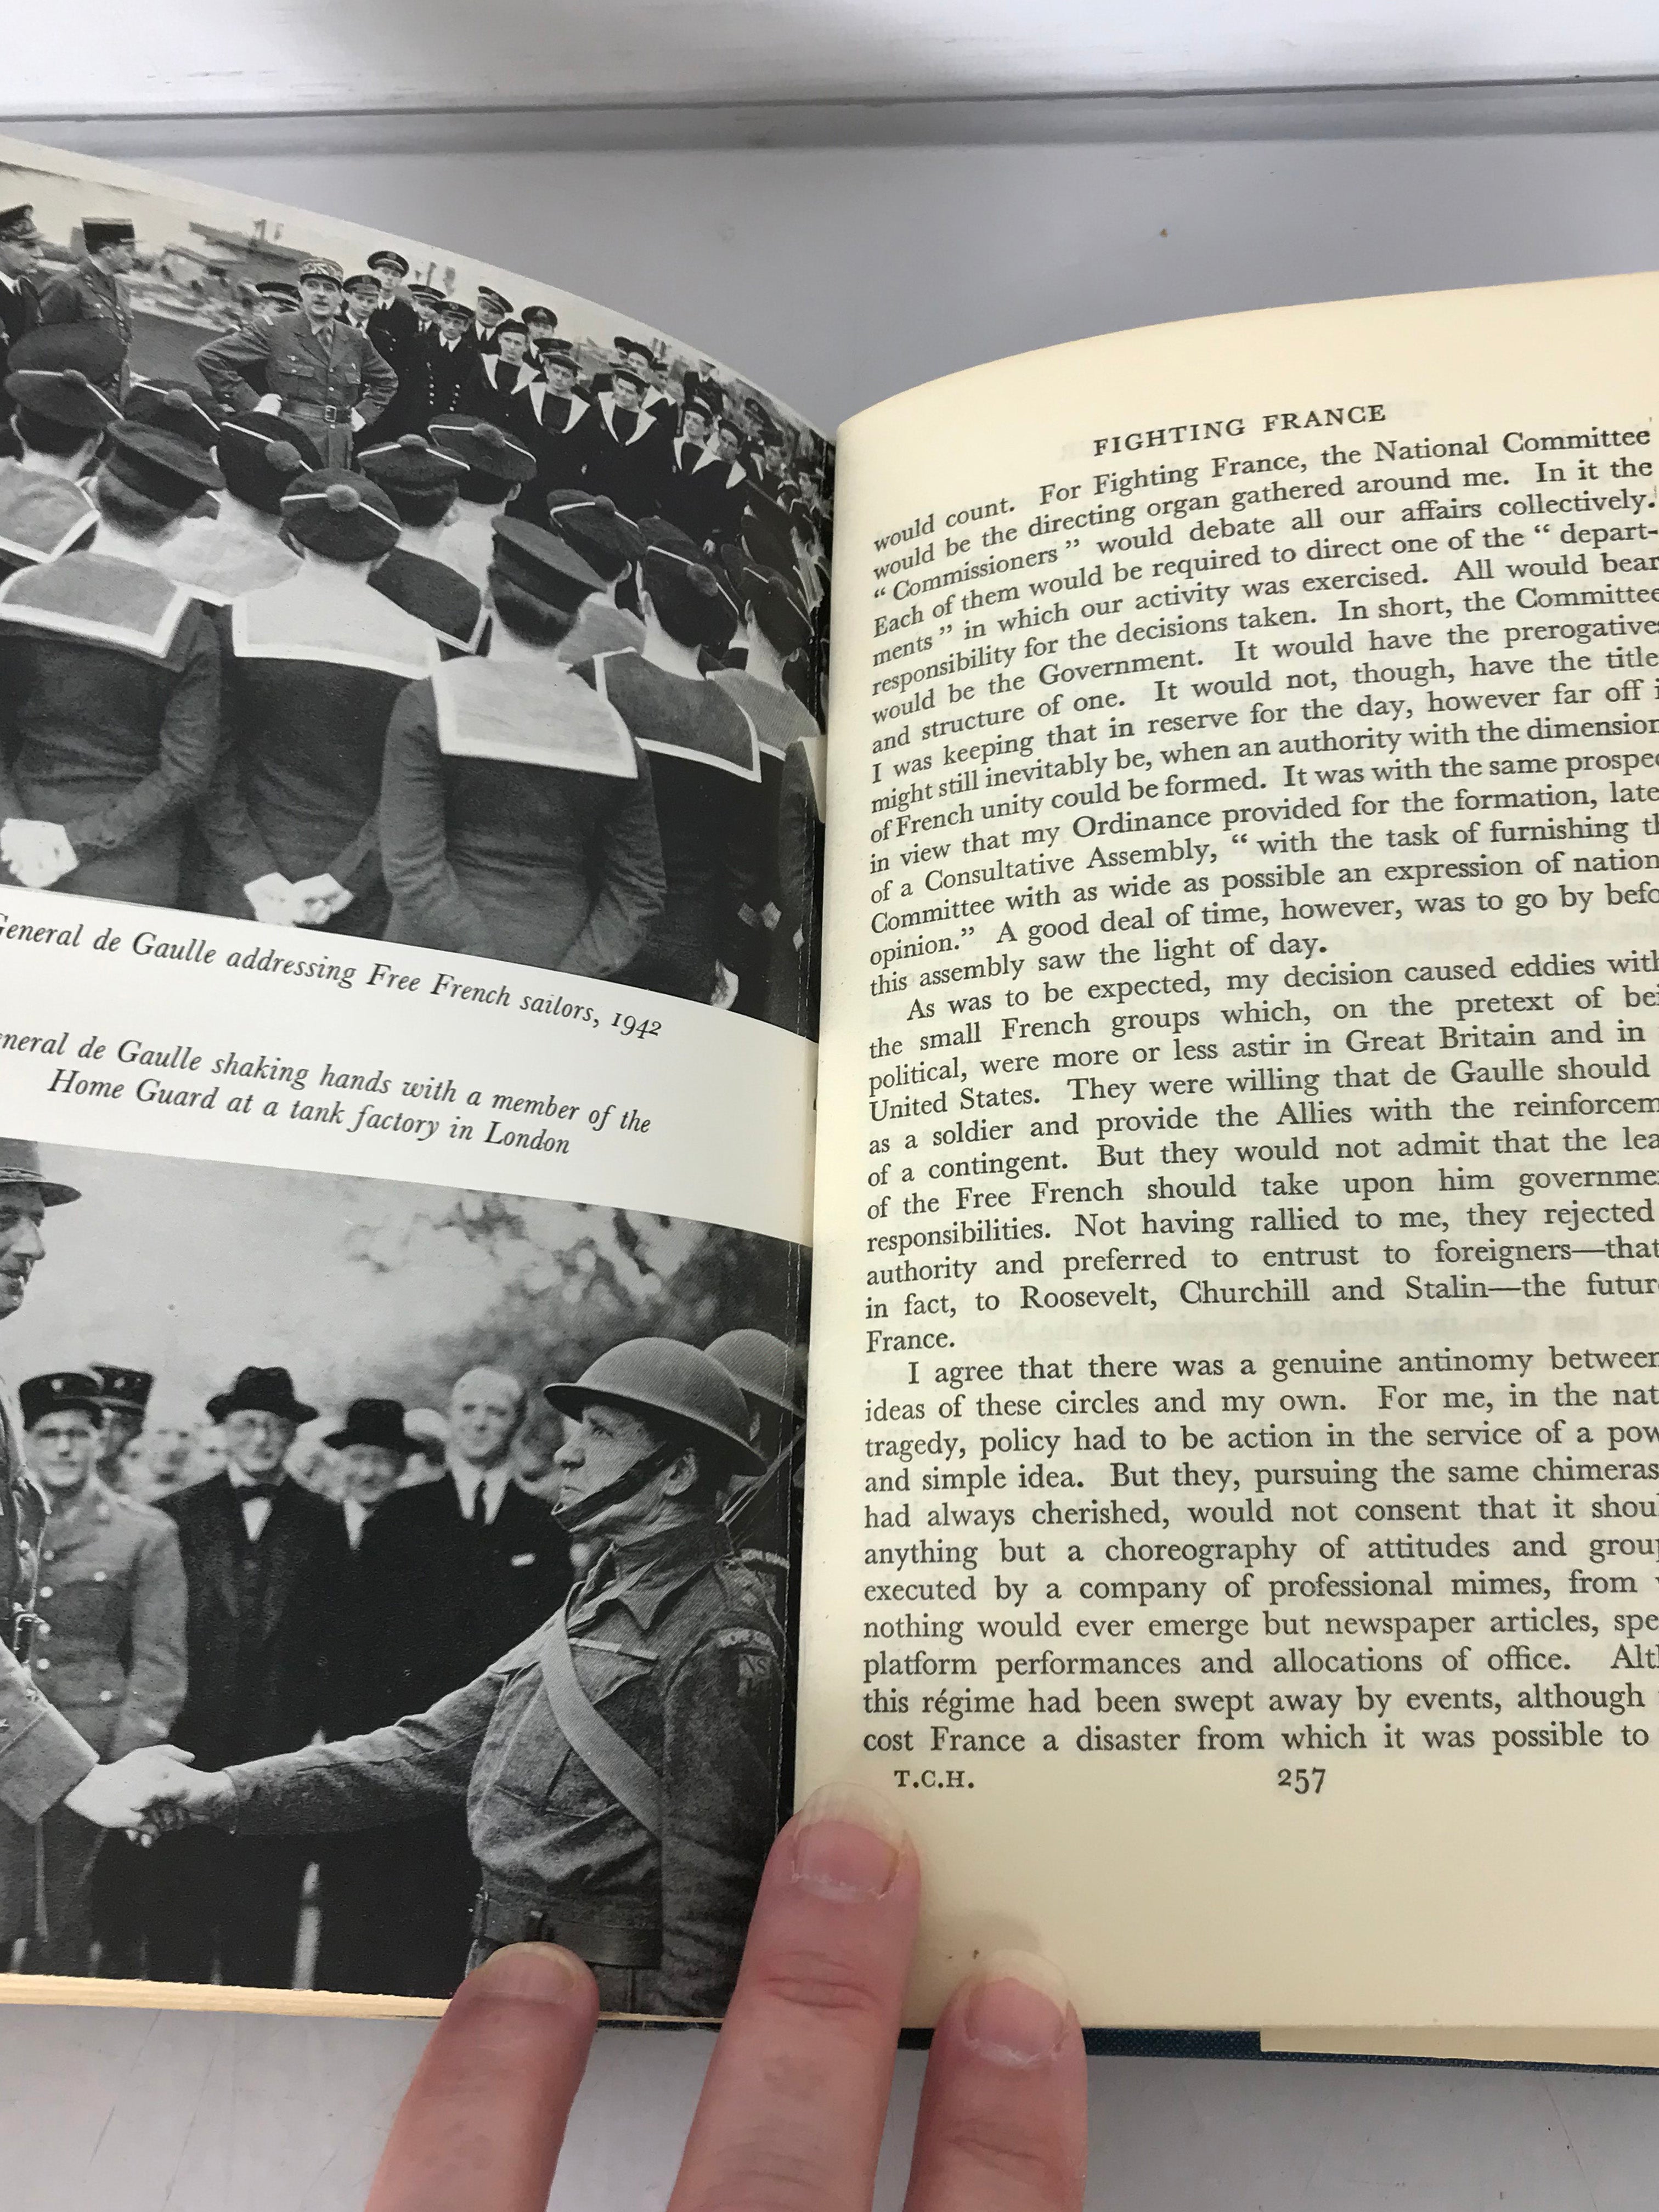 War memoirs: the call to honour, 1940-1942: Gaulle, Charles de